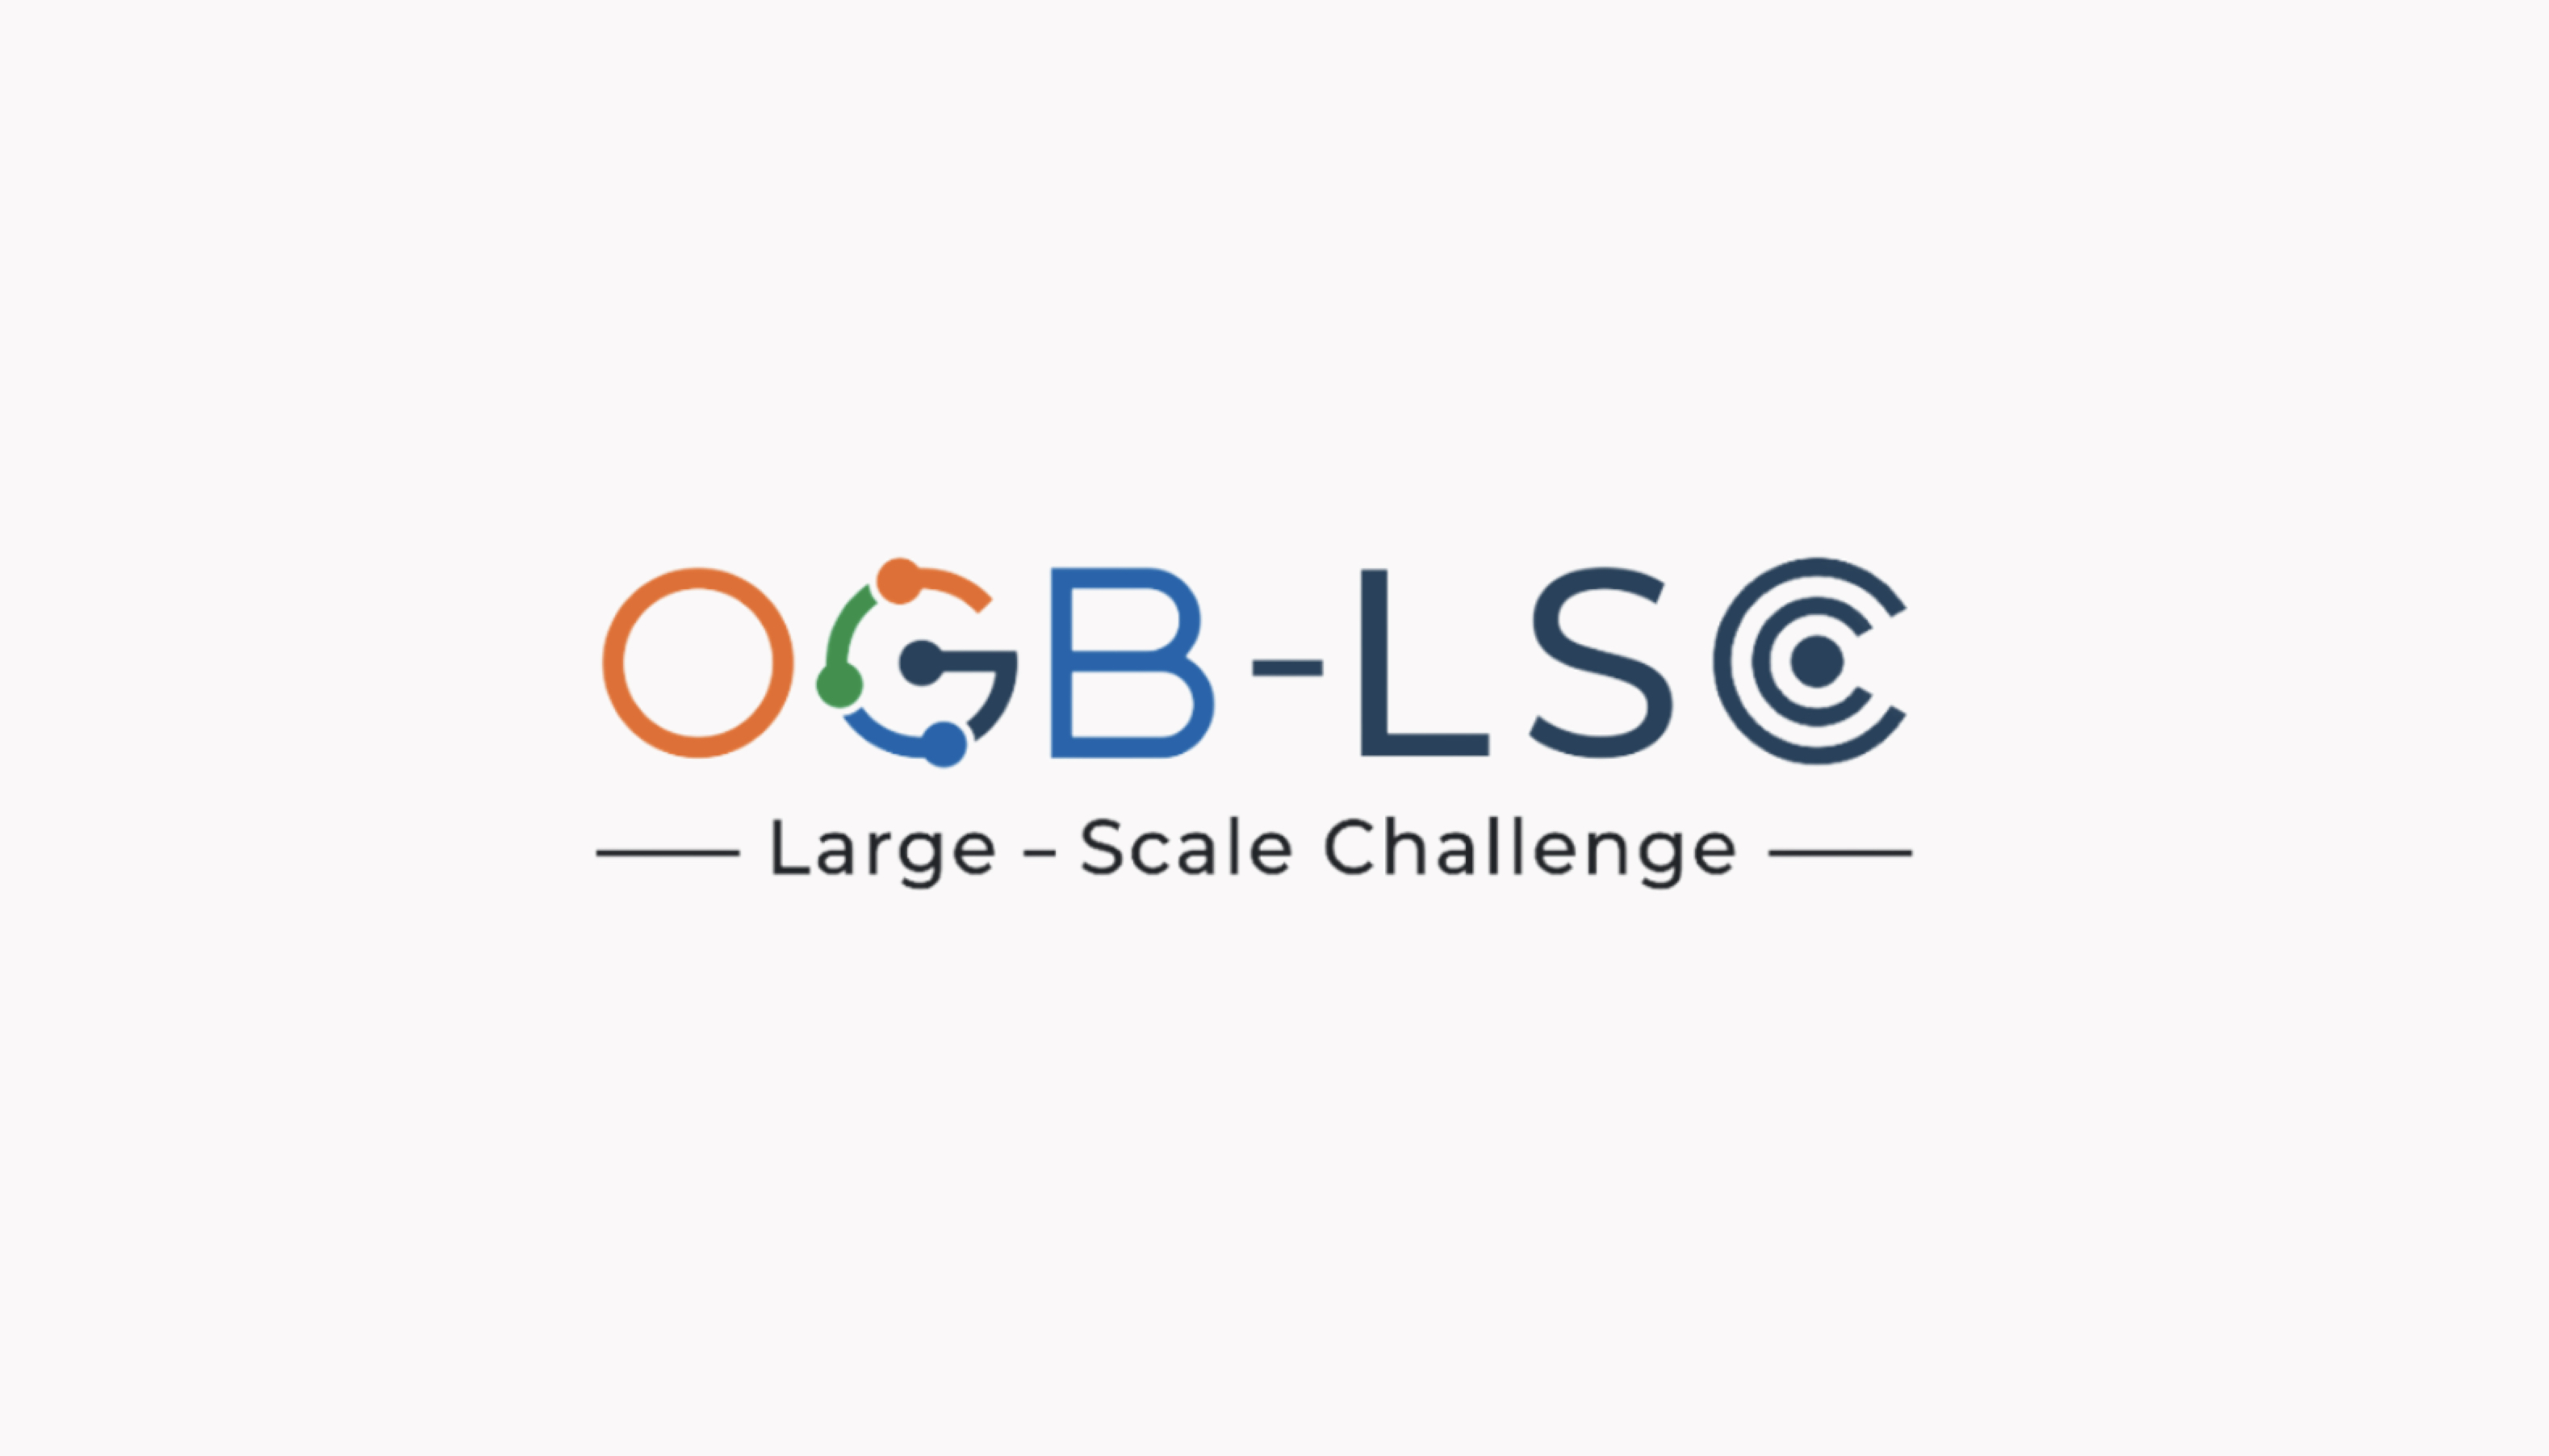 OGB-LSC